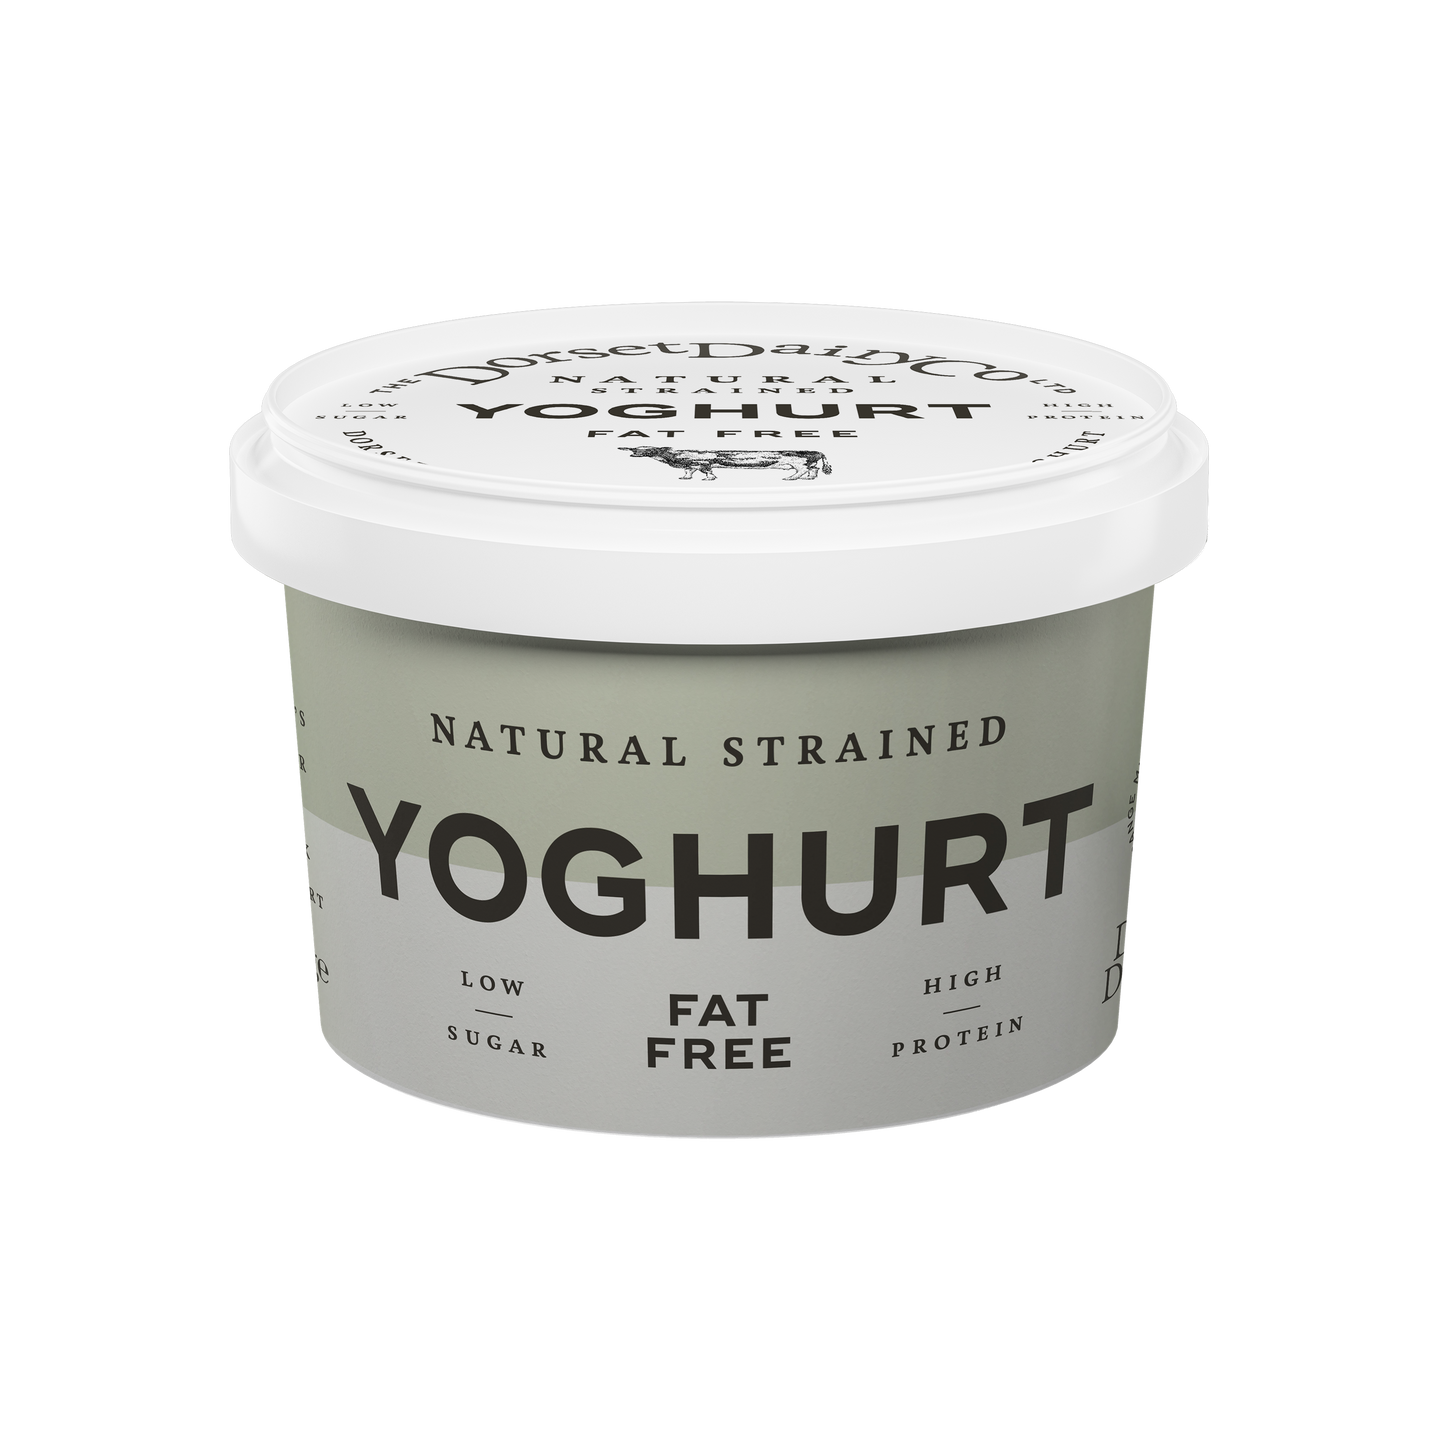 Fat Free Strained Yoghurt - 500g